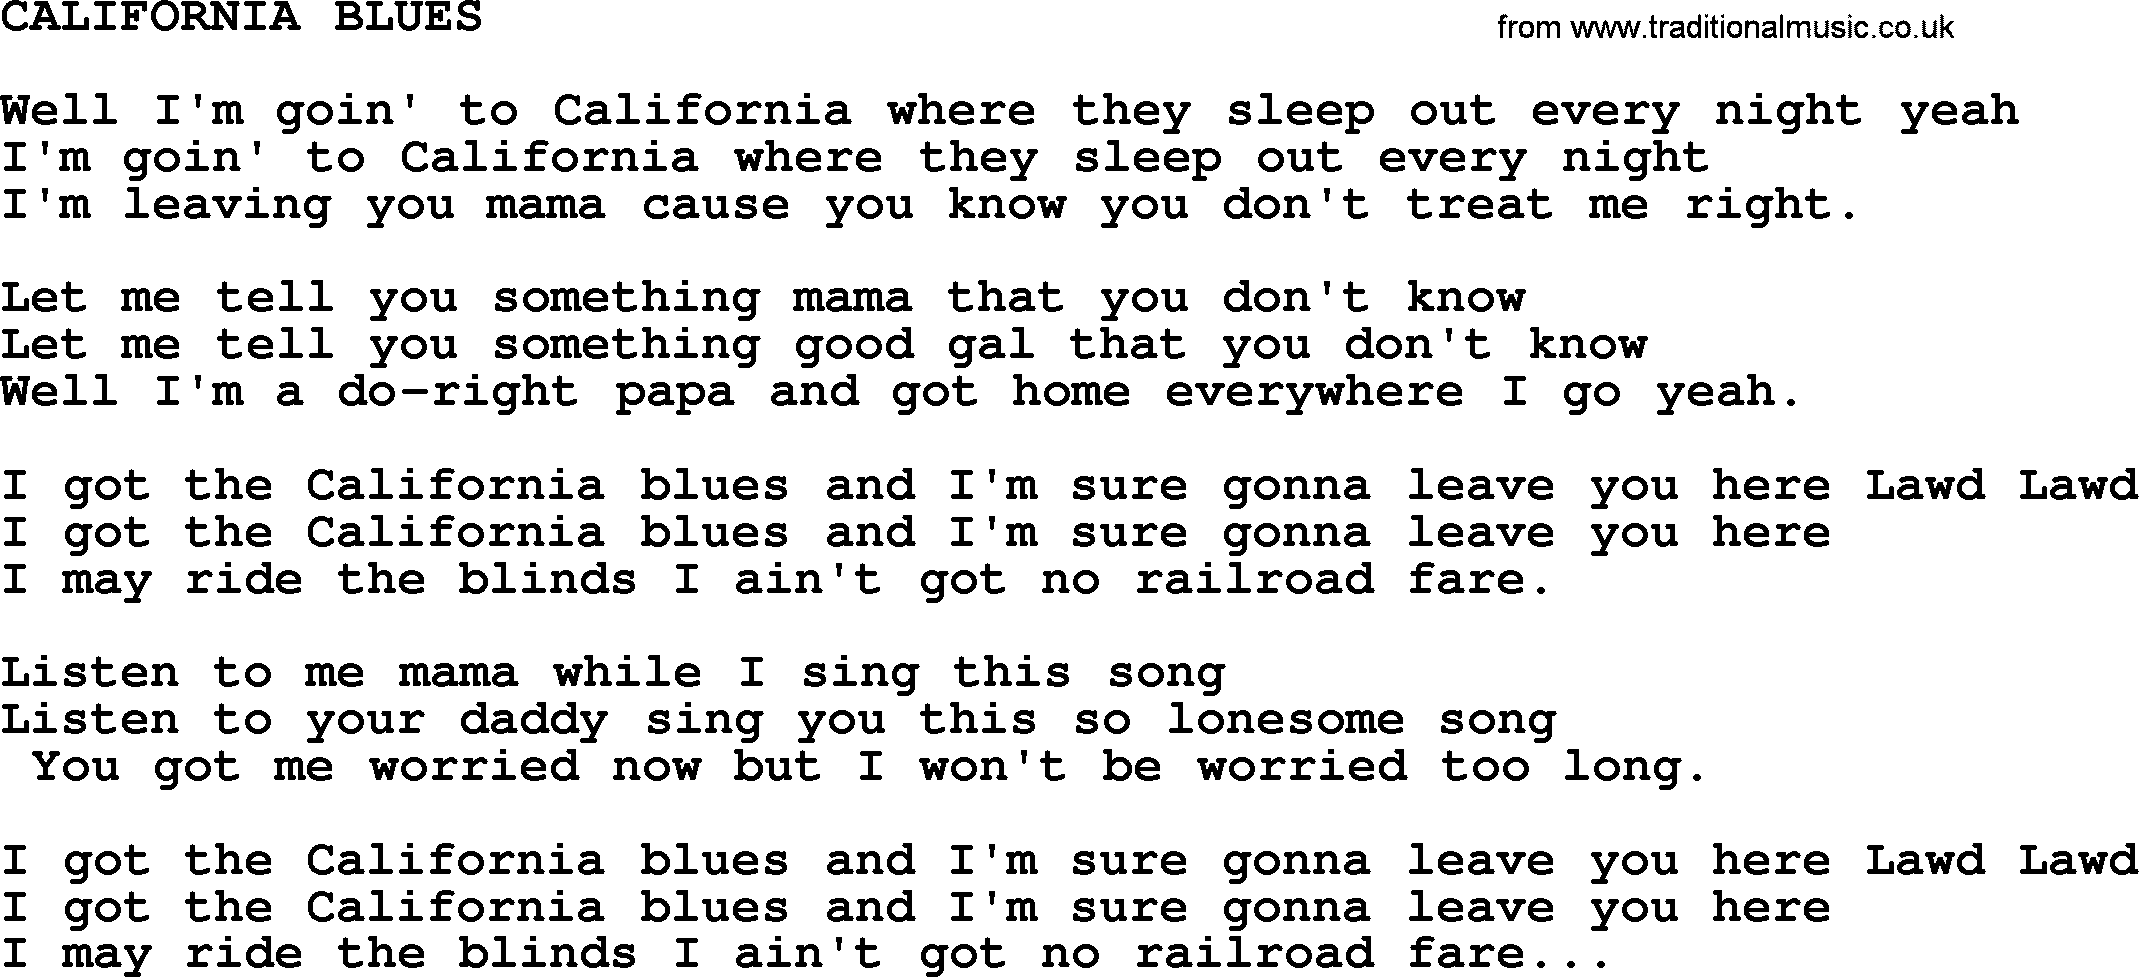 Merle Haggard song: California Blues, lyrics.